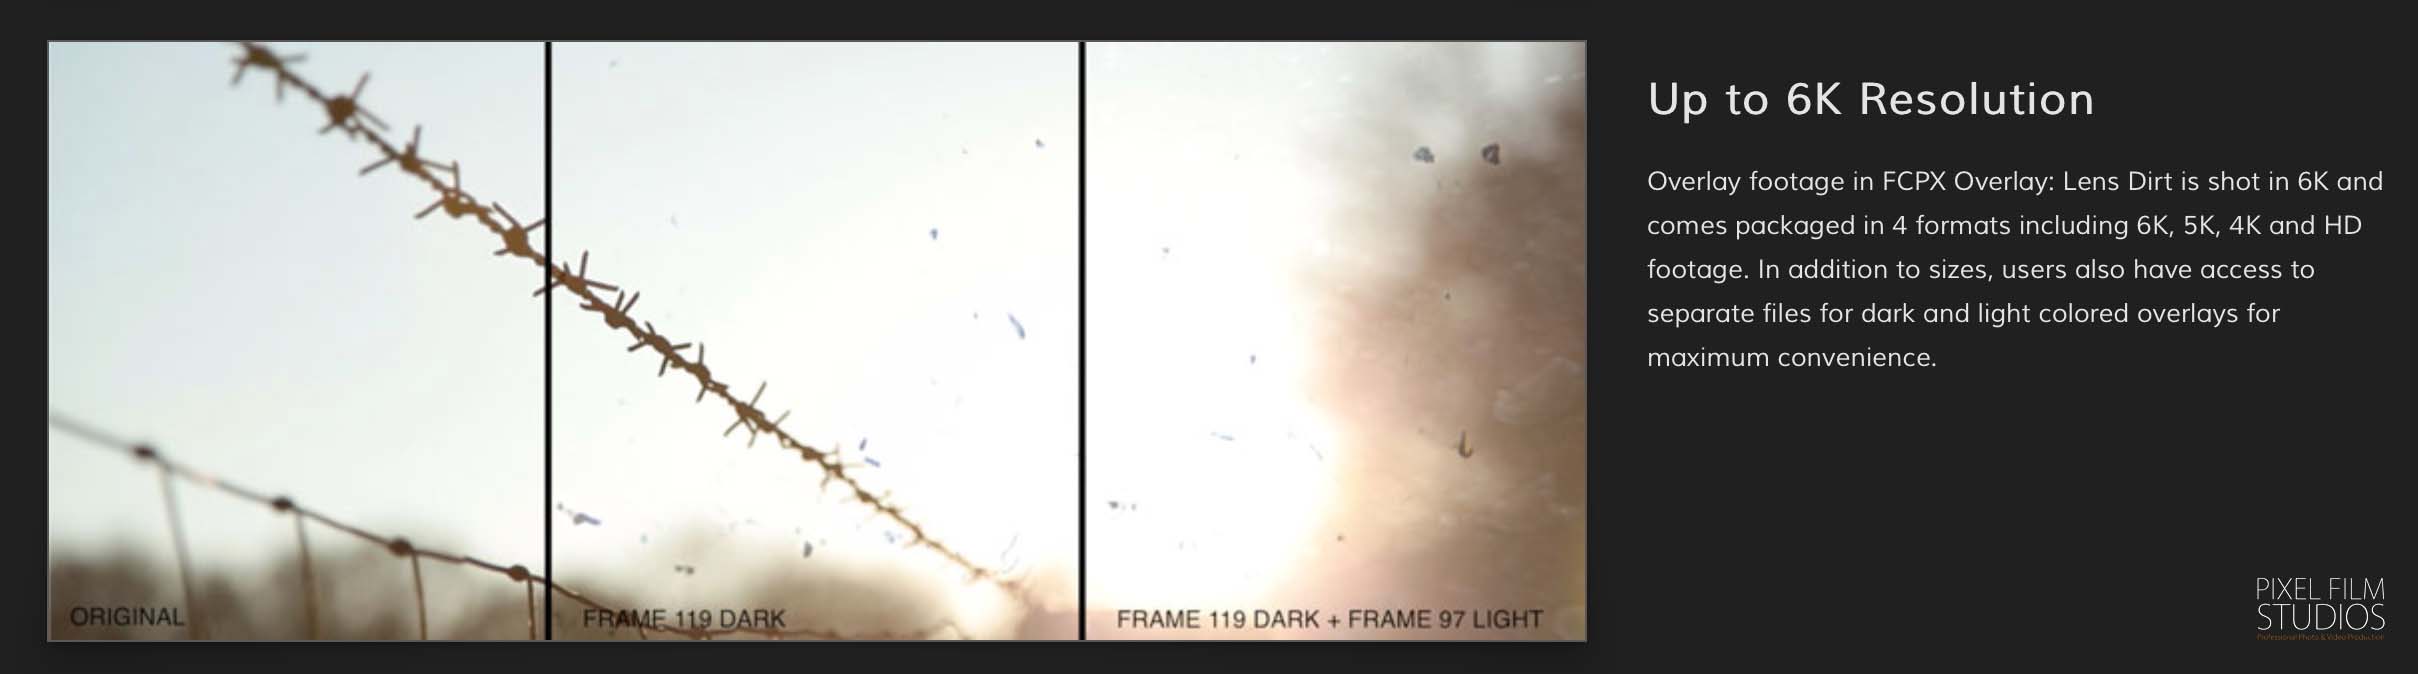 FCPX Overlays Lens Dirt Plugin for Final Cut Pro X from Pixel Film Studios